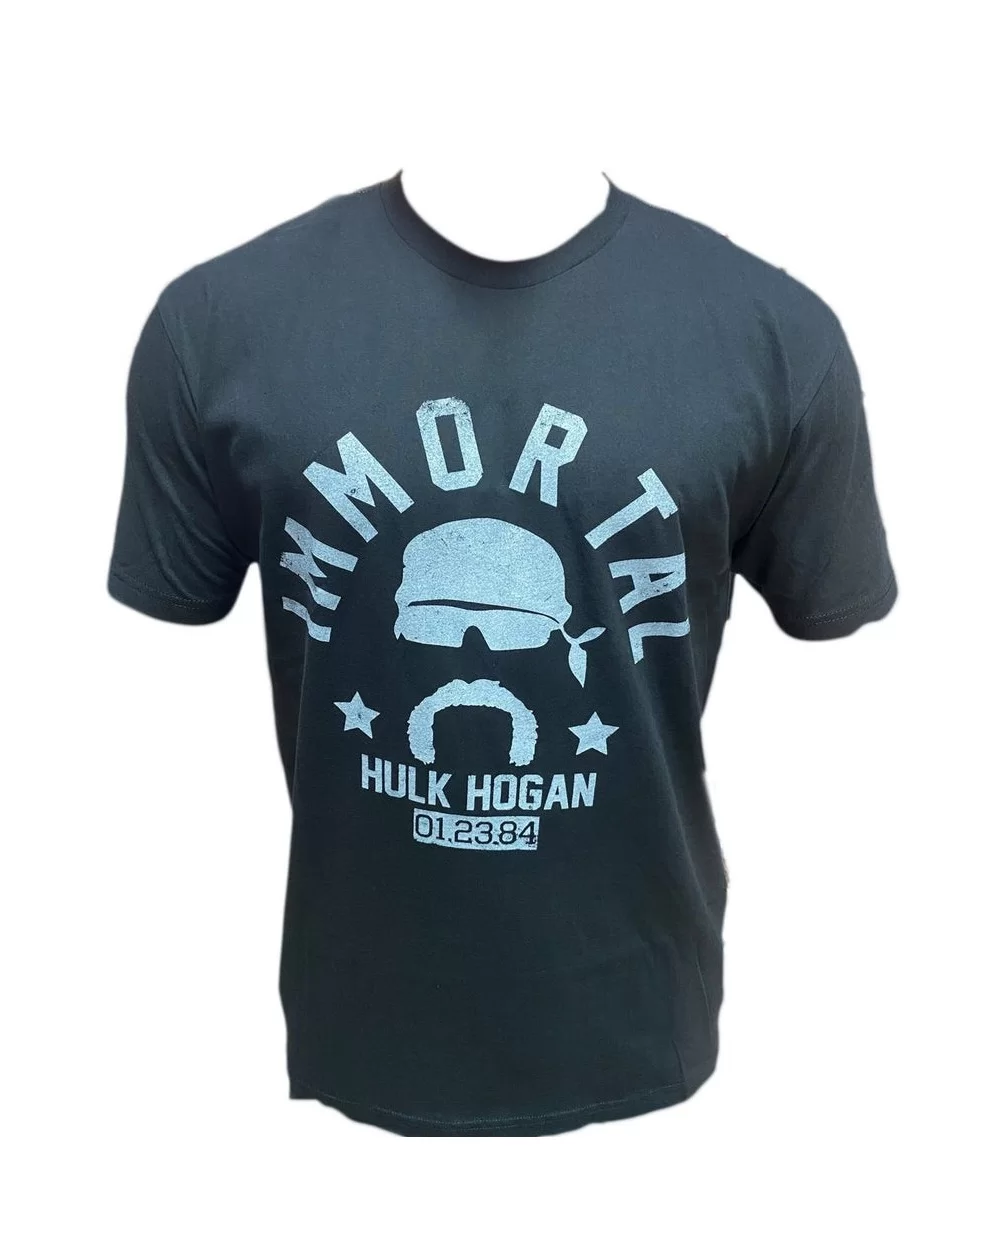 Immortal Hulk Hogan Tee $7.40 Apparel